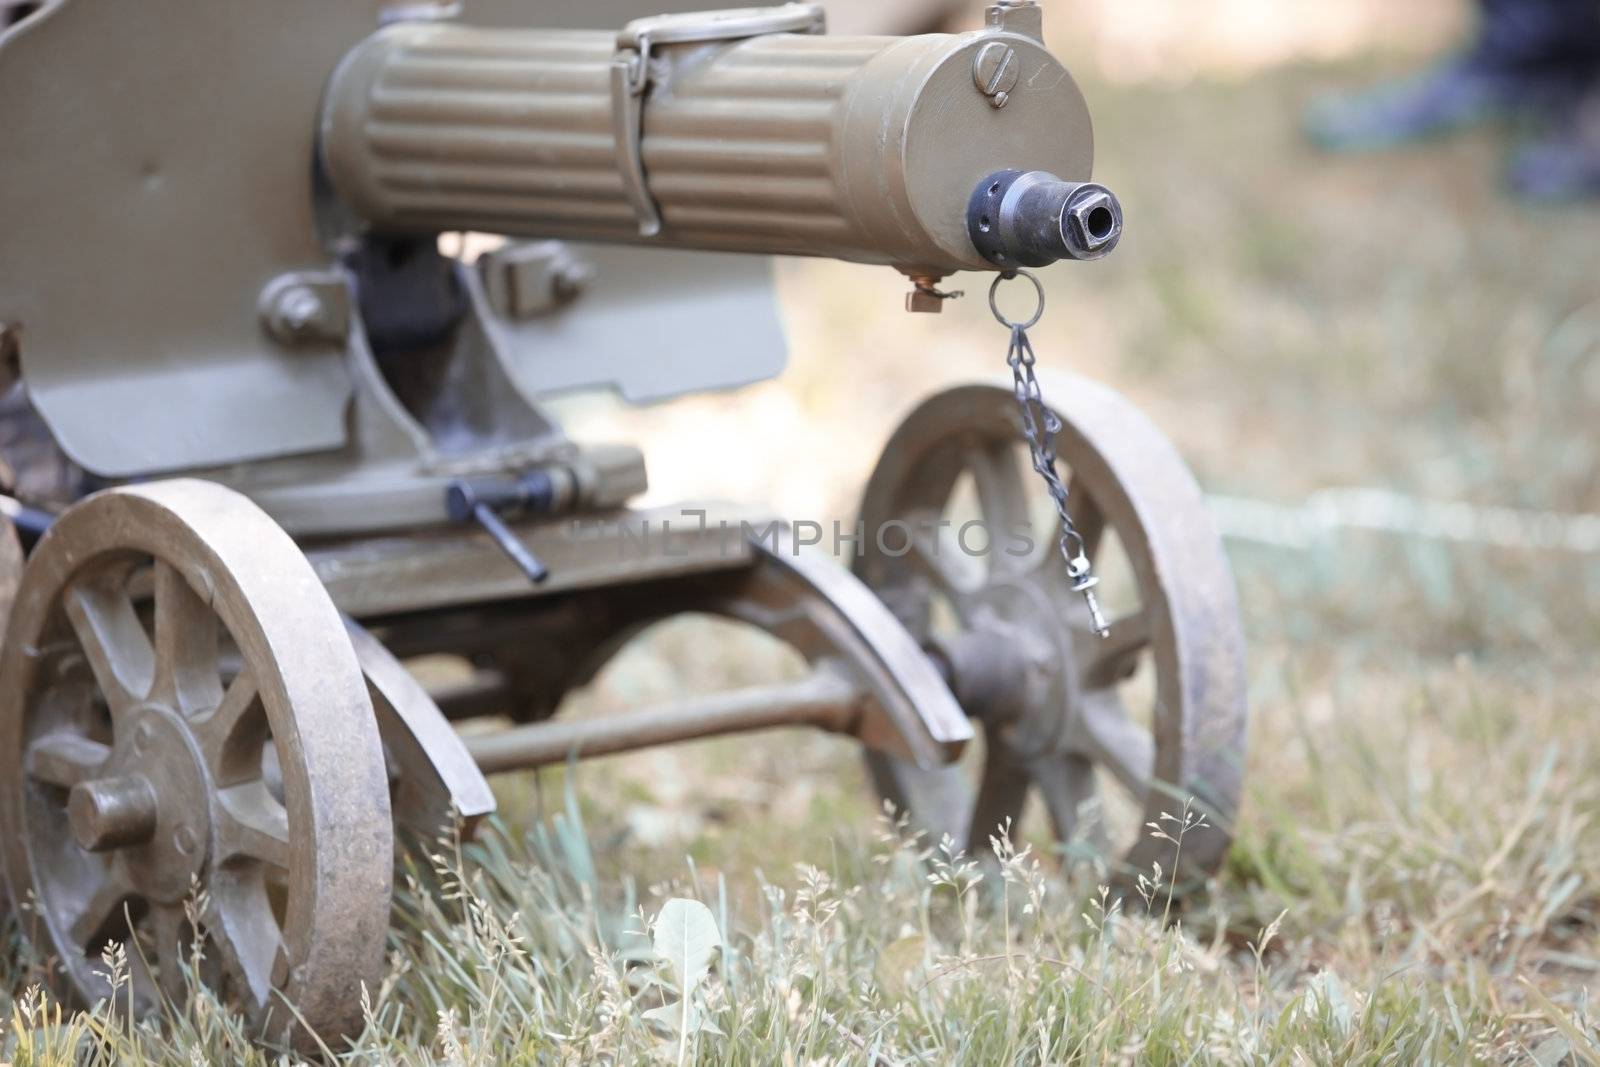 Maxim heavy machine gun in the field